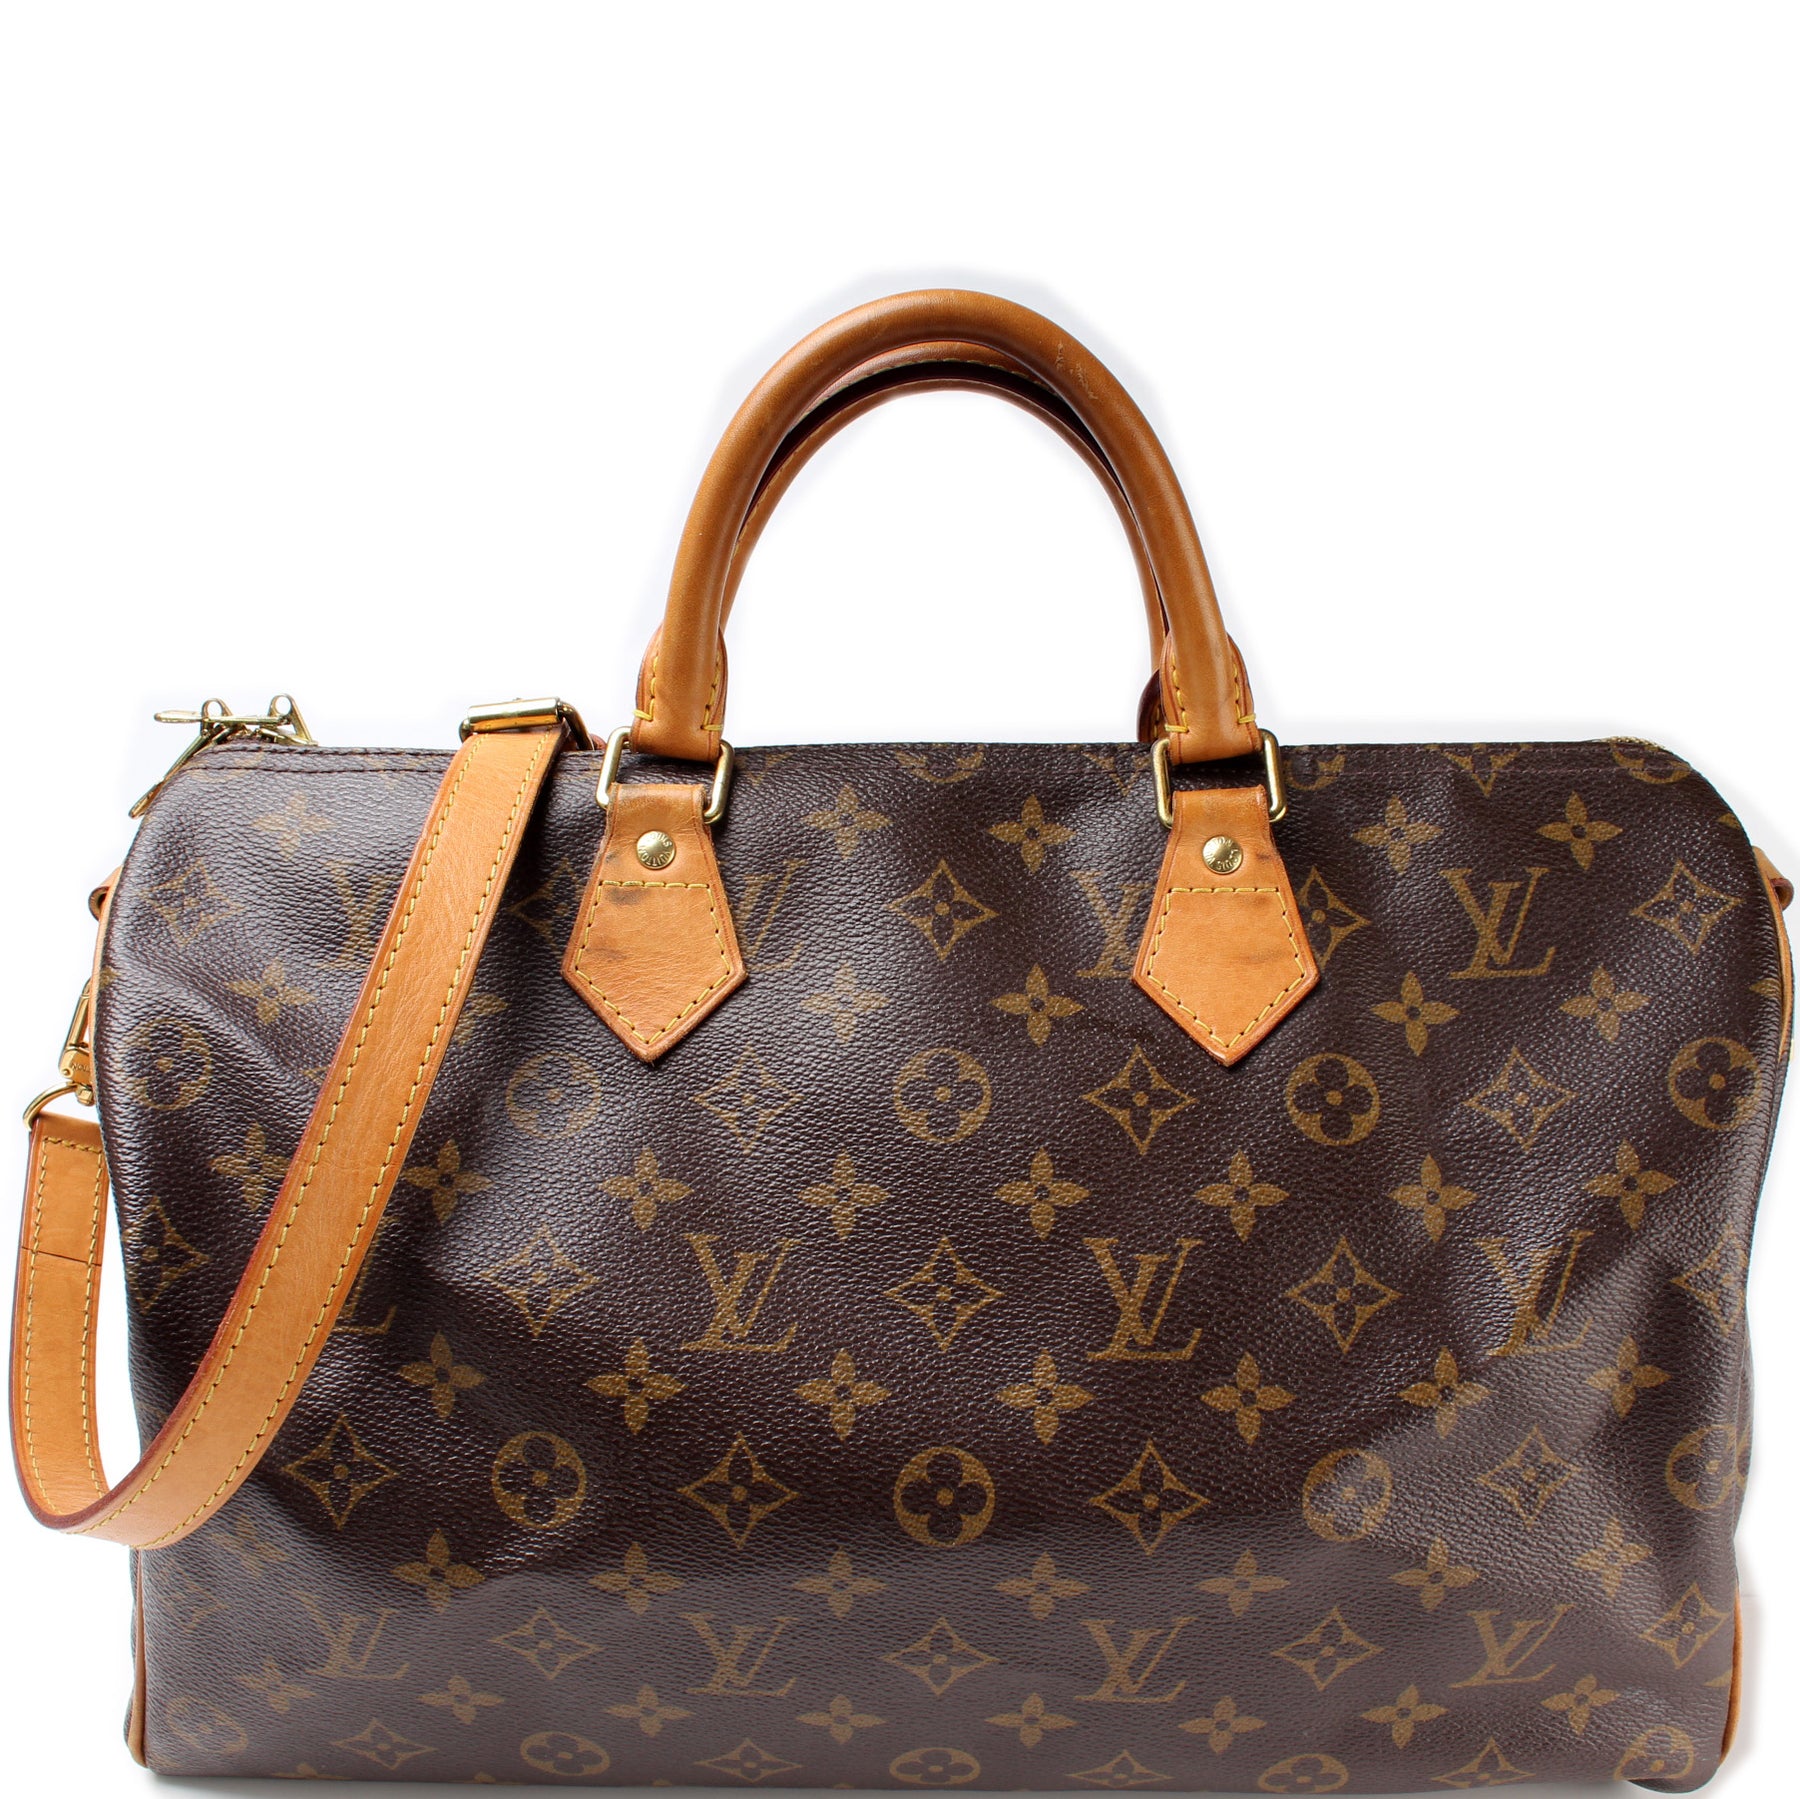 Buy Free Shipping [Used] LOUIS VUITTON Speedy 35 Monogram Handbag